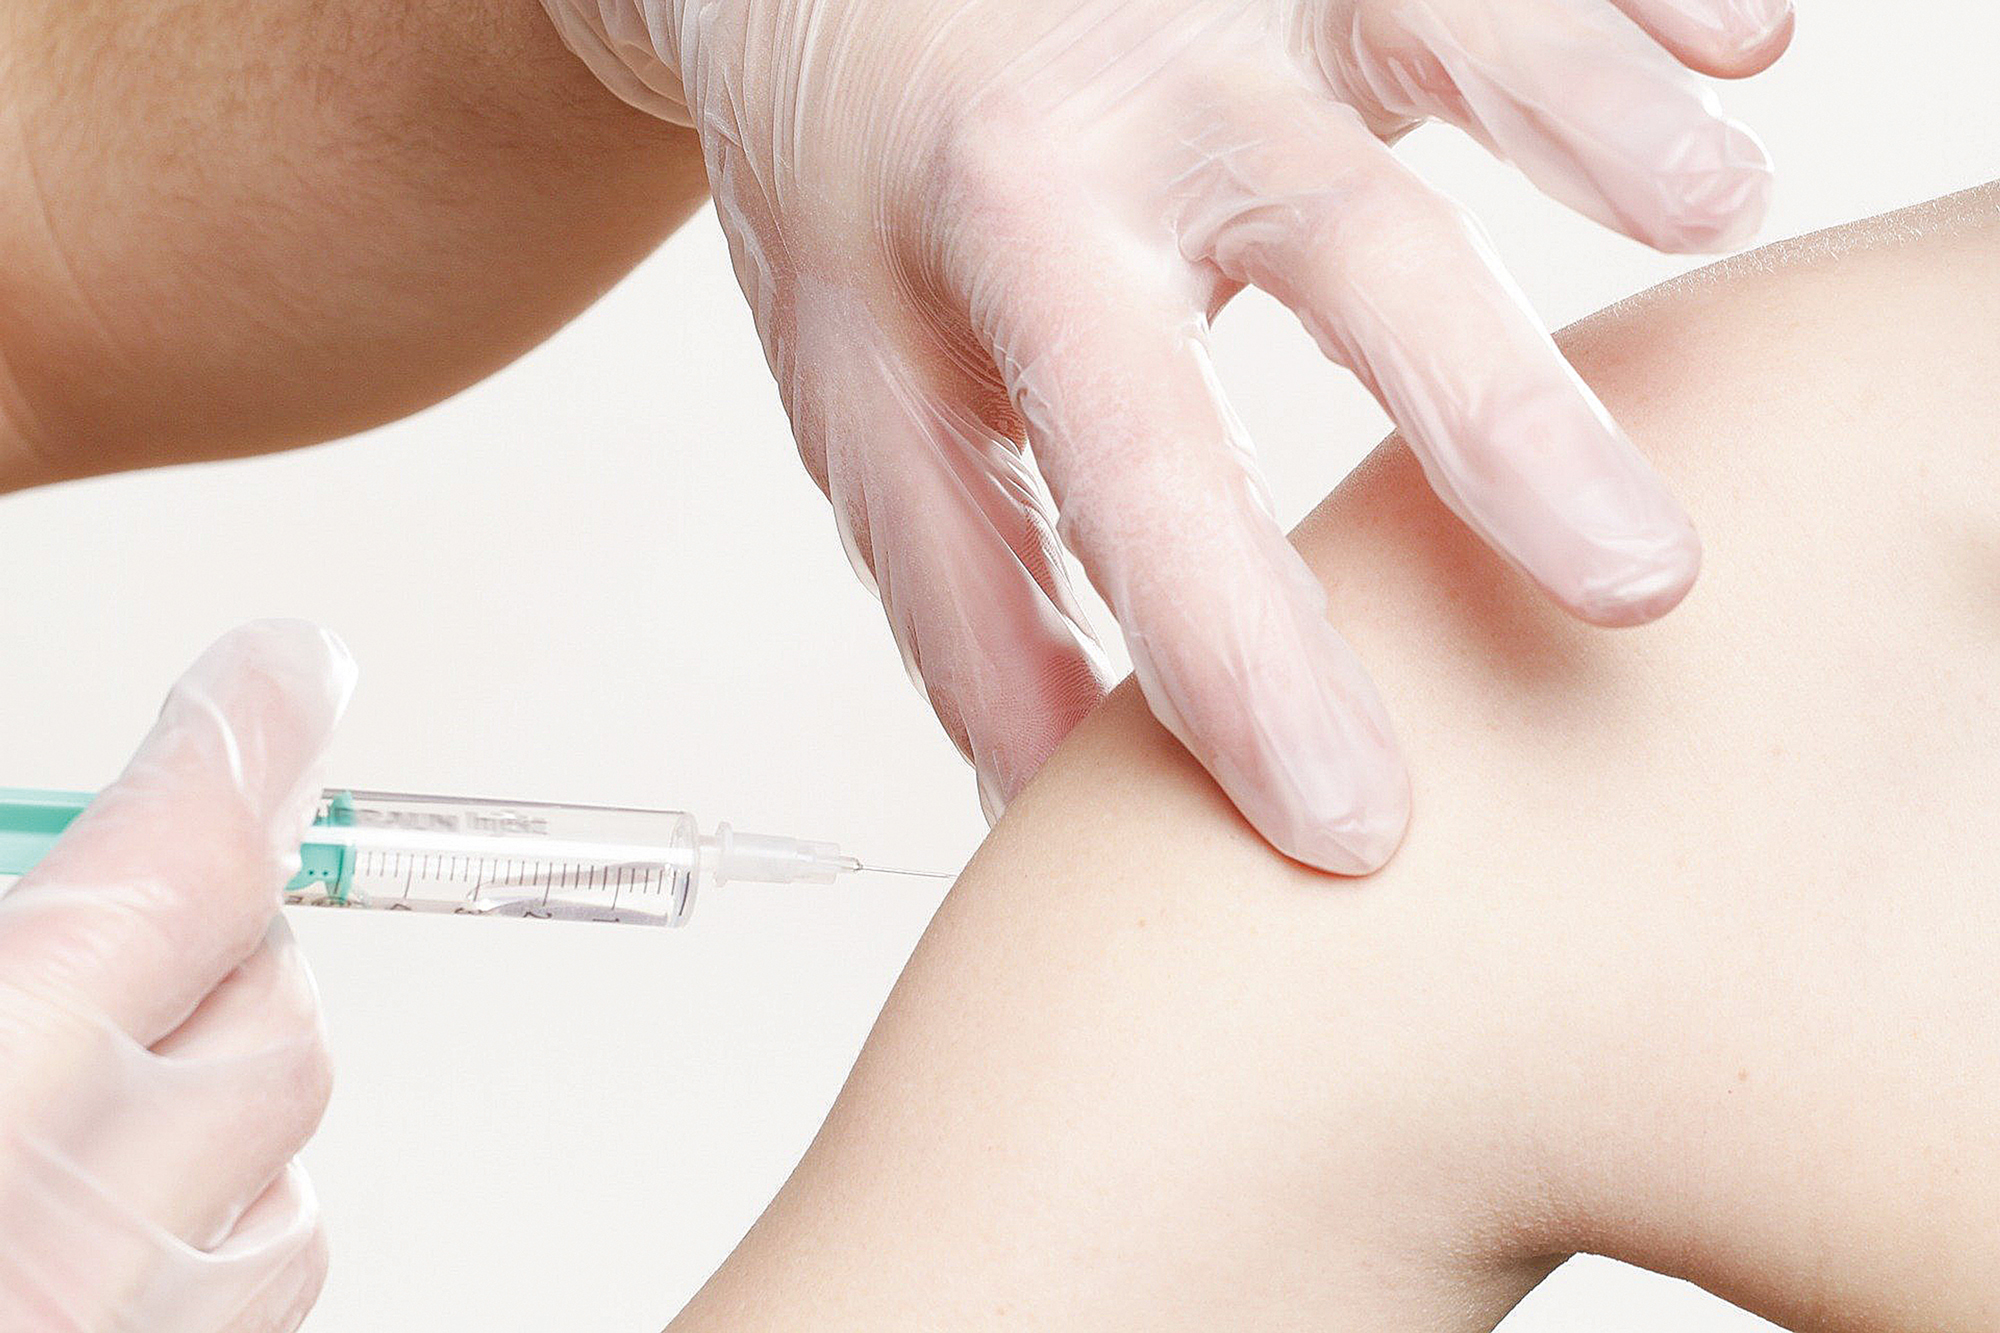 Jätkuvalt: COVID-19 vastasest vaktsineerimisest. Foto: Pixabay, Angelo Esslinger